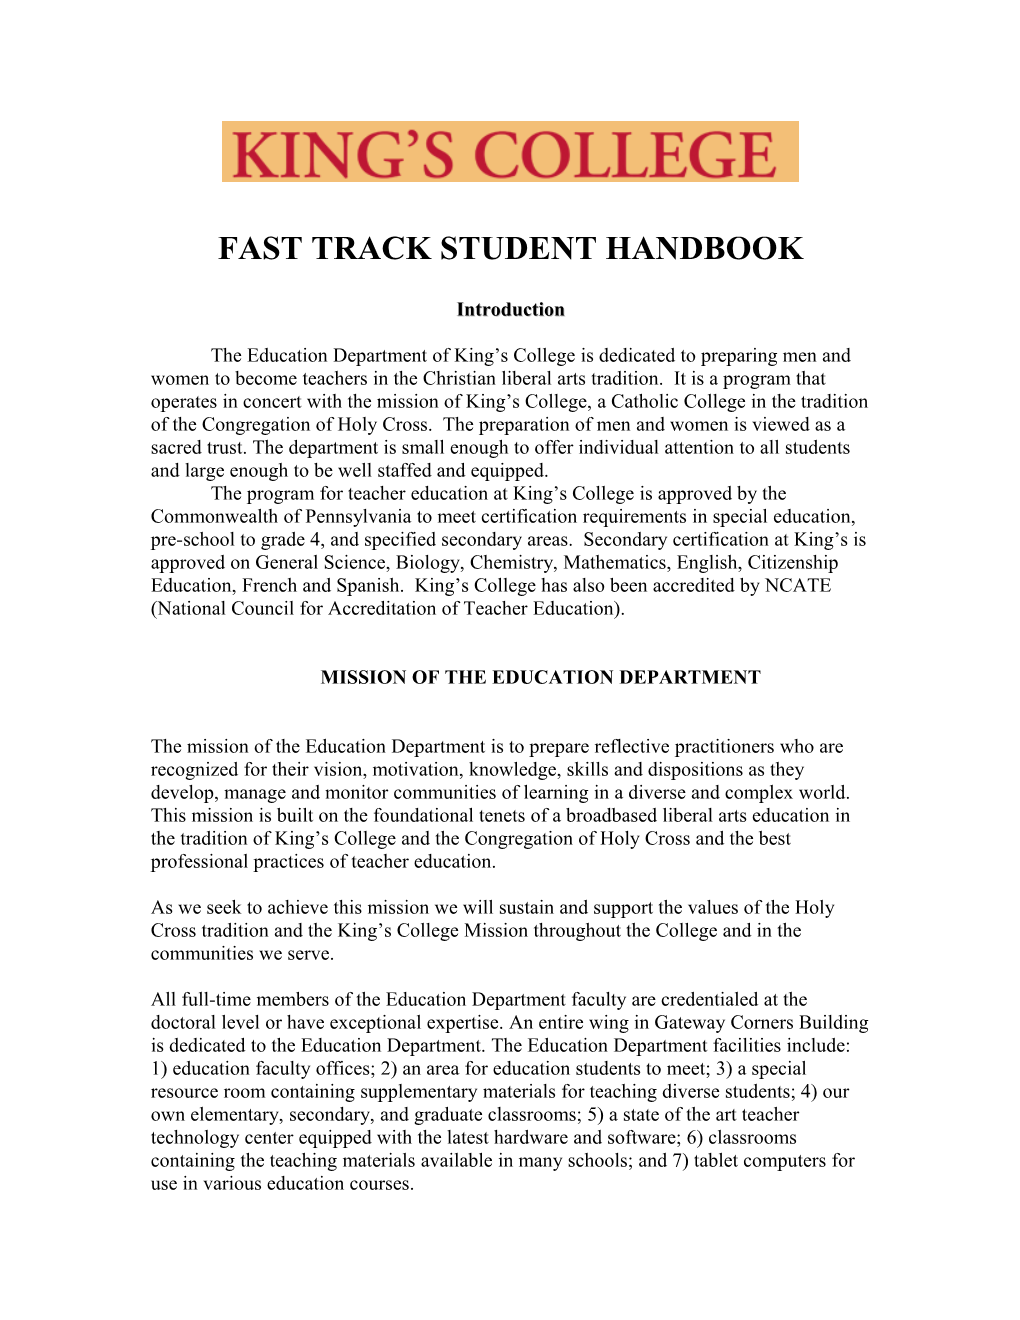 Fast Track Student Handbook